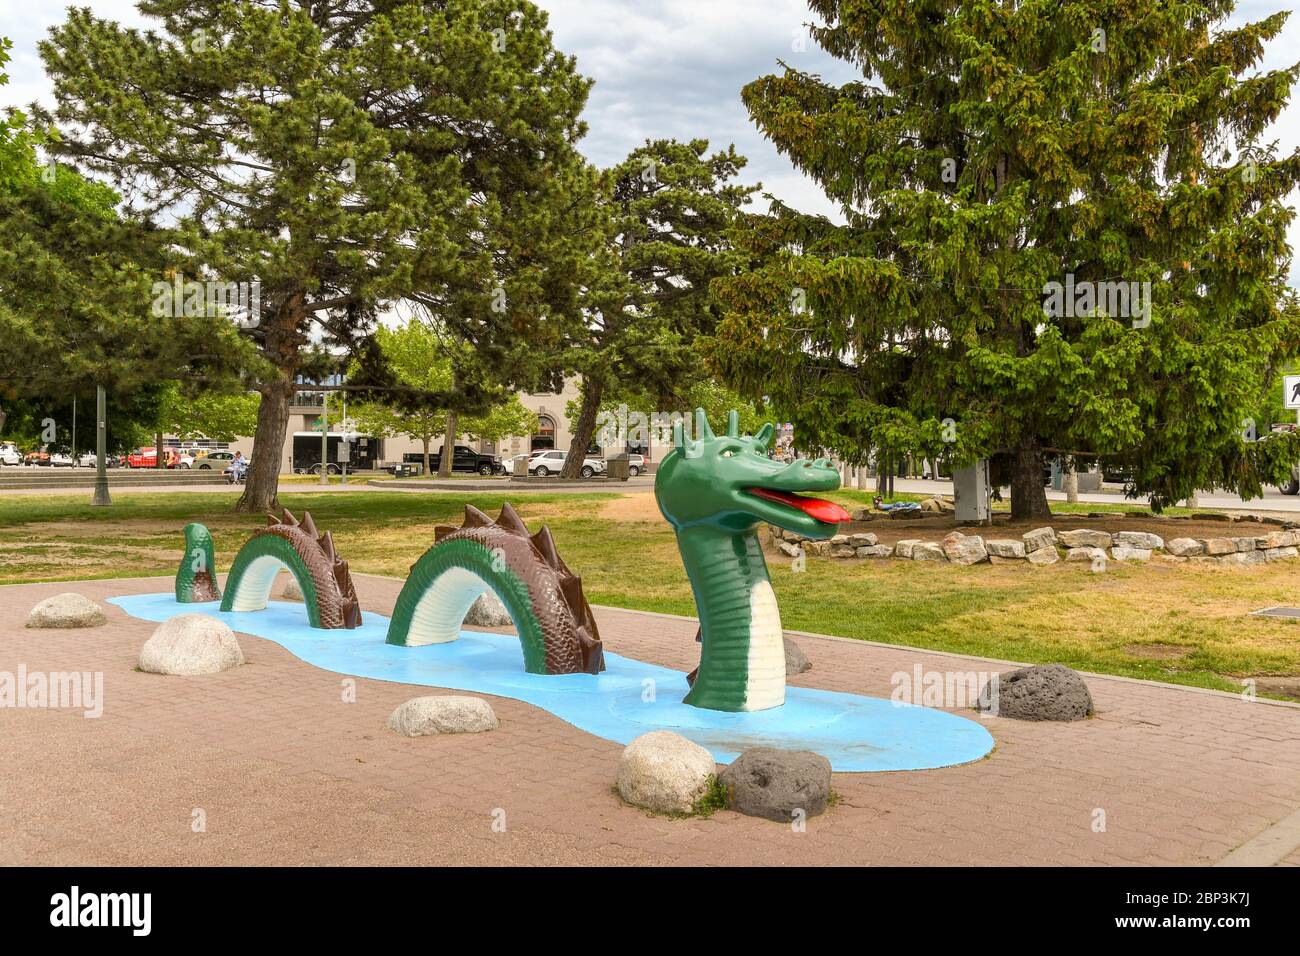 KELOWNA, BRITISH COLUMBIA, CANADA - JUNE 2018: Large sculpture of a sea monster in a public park near the centre of Kelowna, British Columbia, Canada. Stock Photo